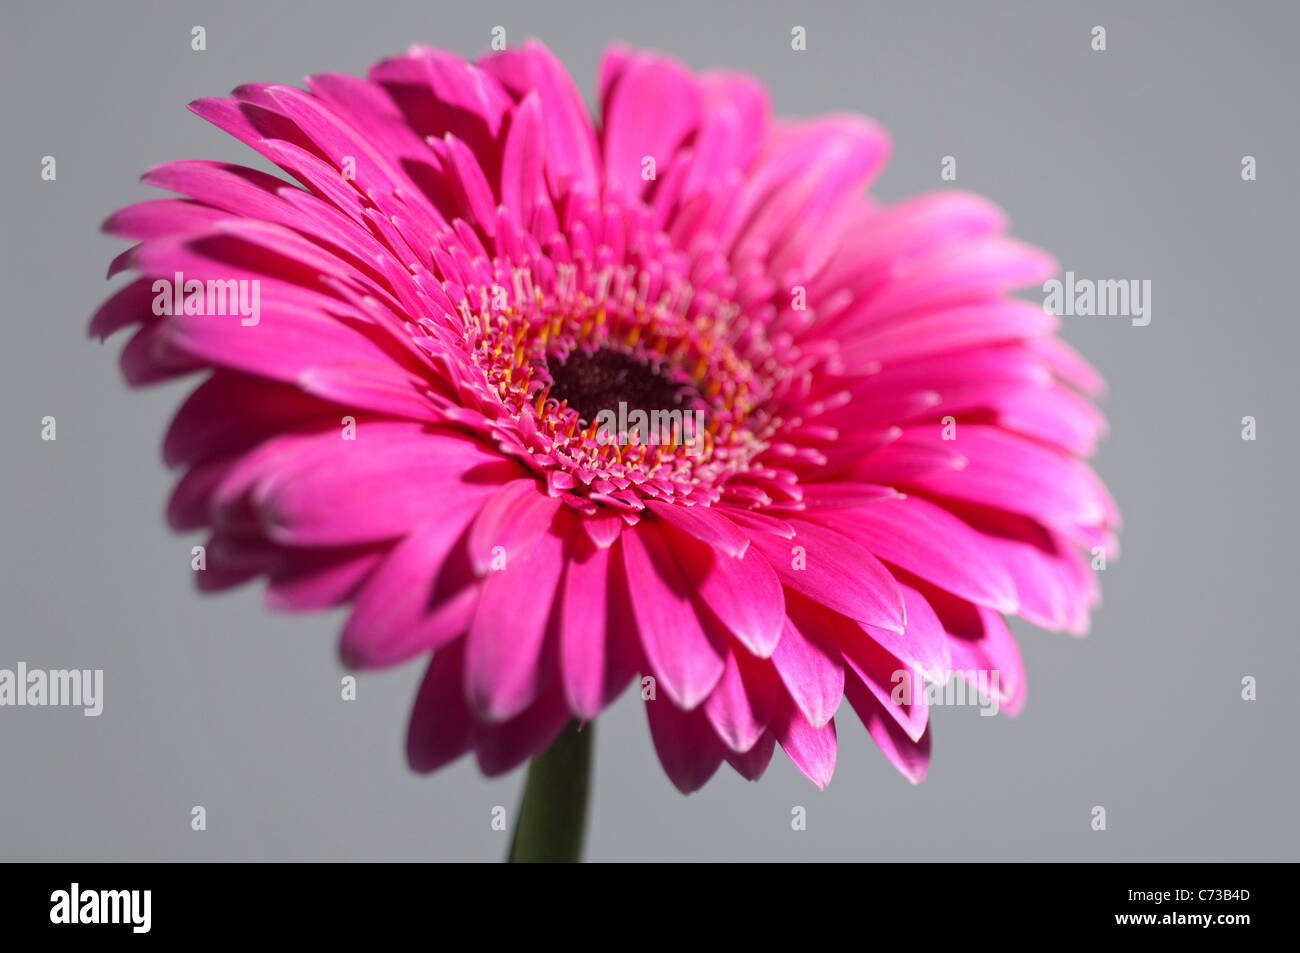 Barberton Daisy, Gerbera (Gerbera jamesonii). Pink flower seen against a gray background. Stock Photo